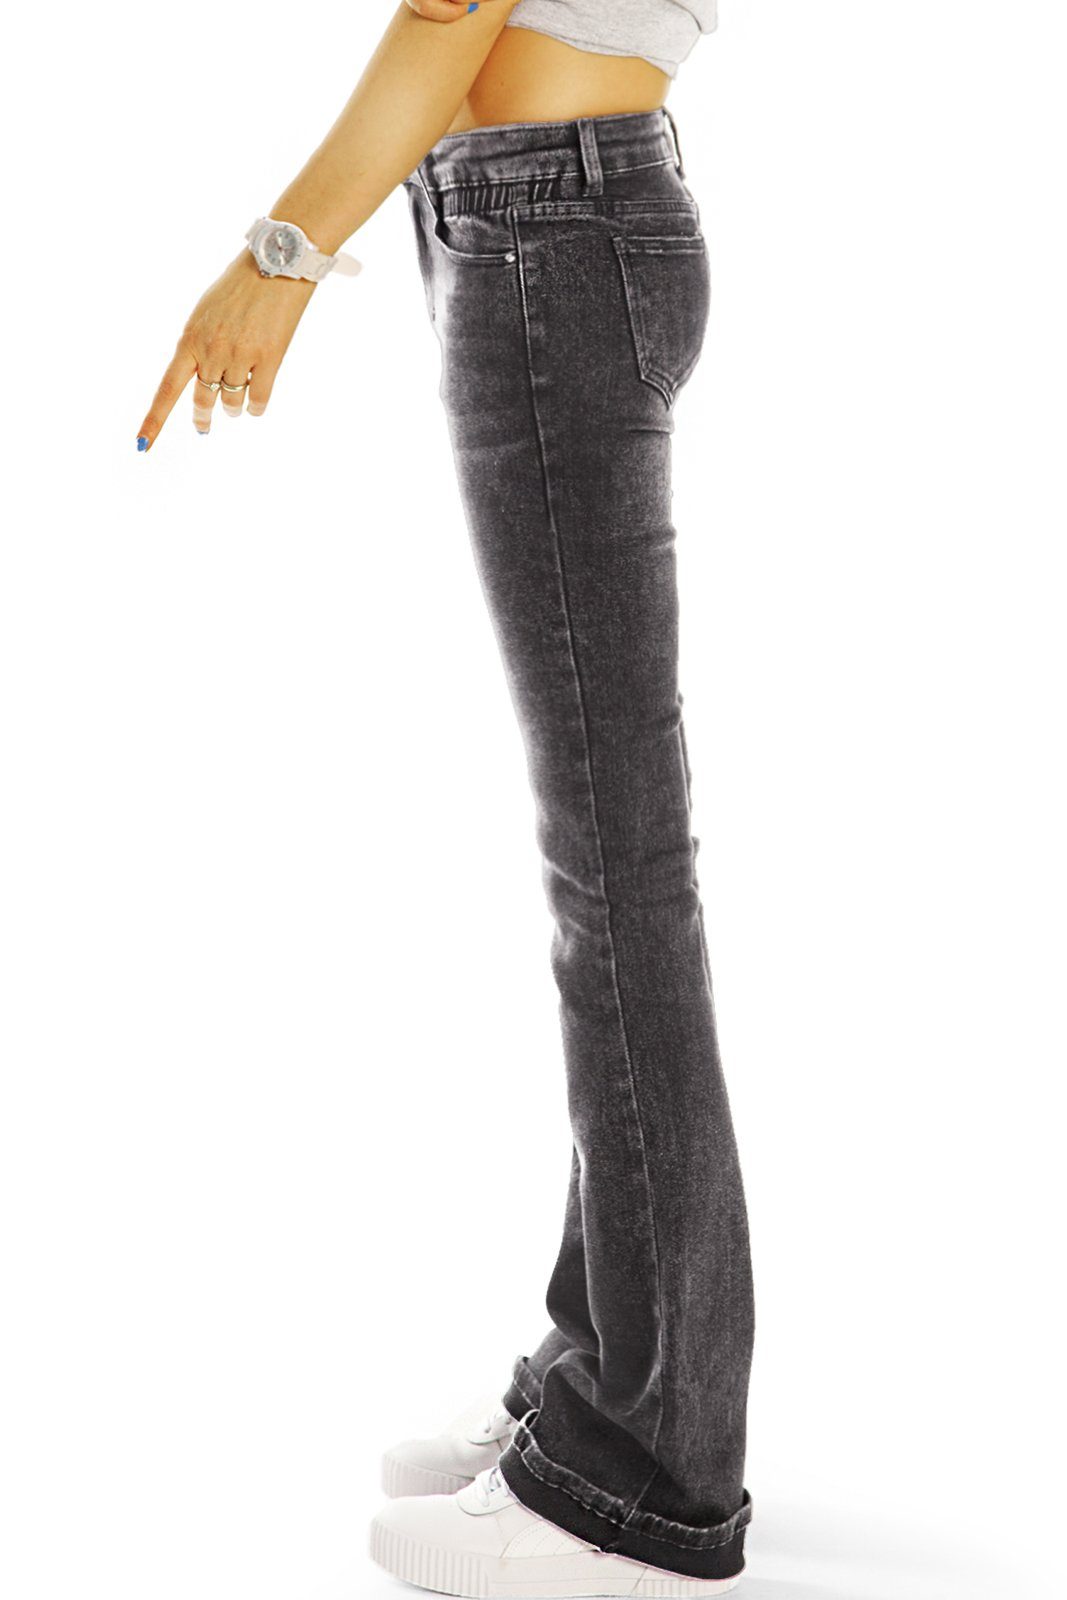 be styled Schlaghosen Damenjeans, medium Bootcut-Jeans waist j1k